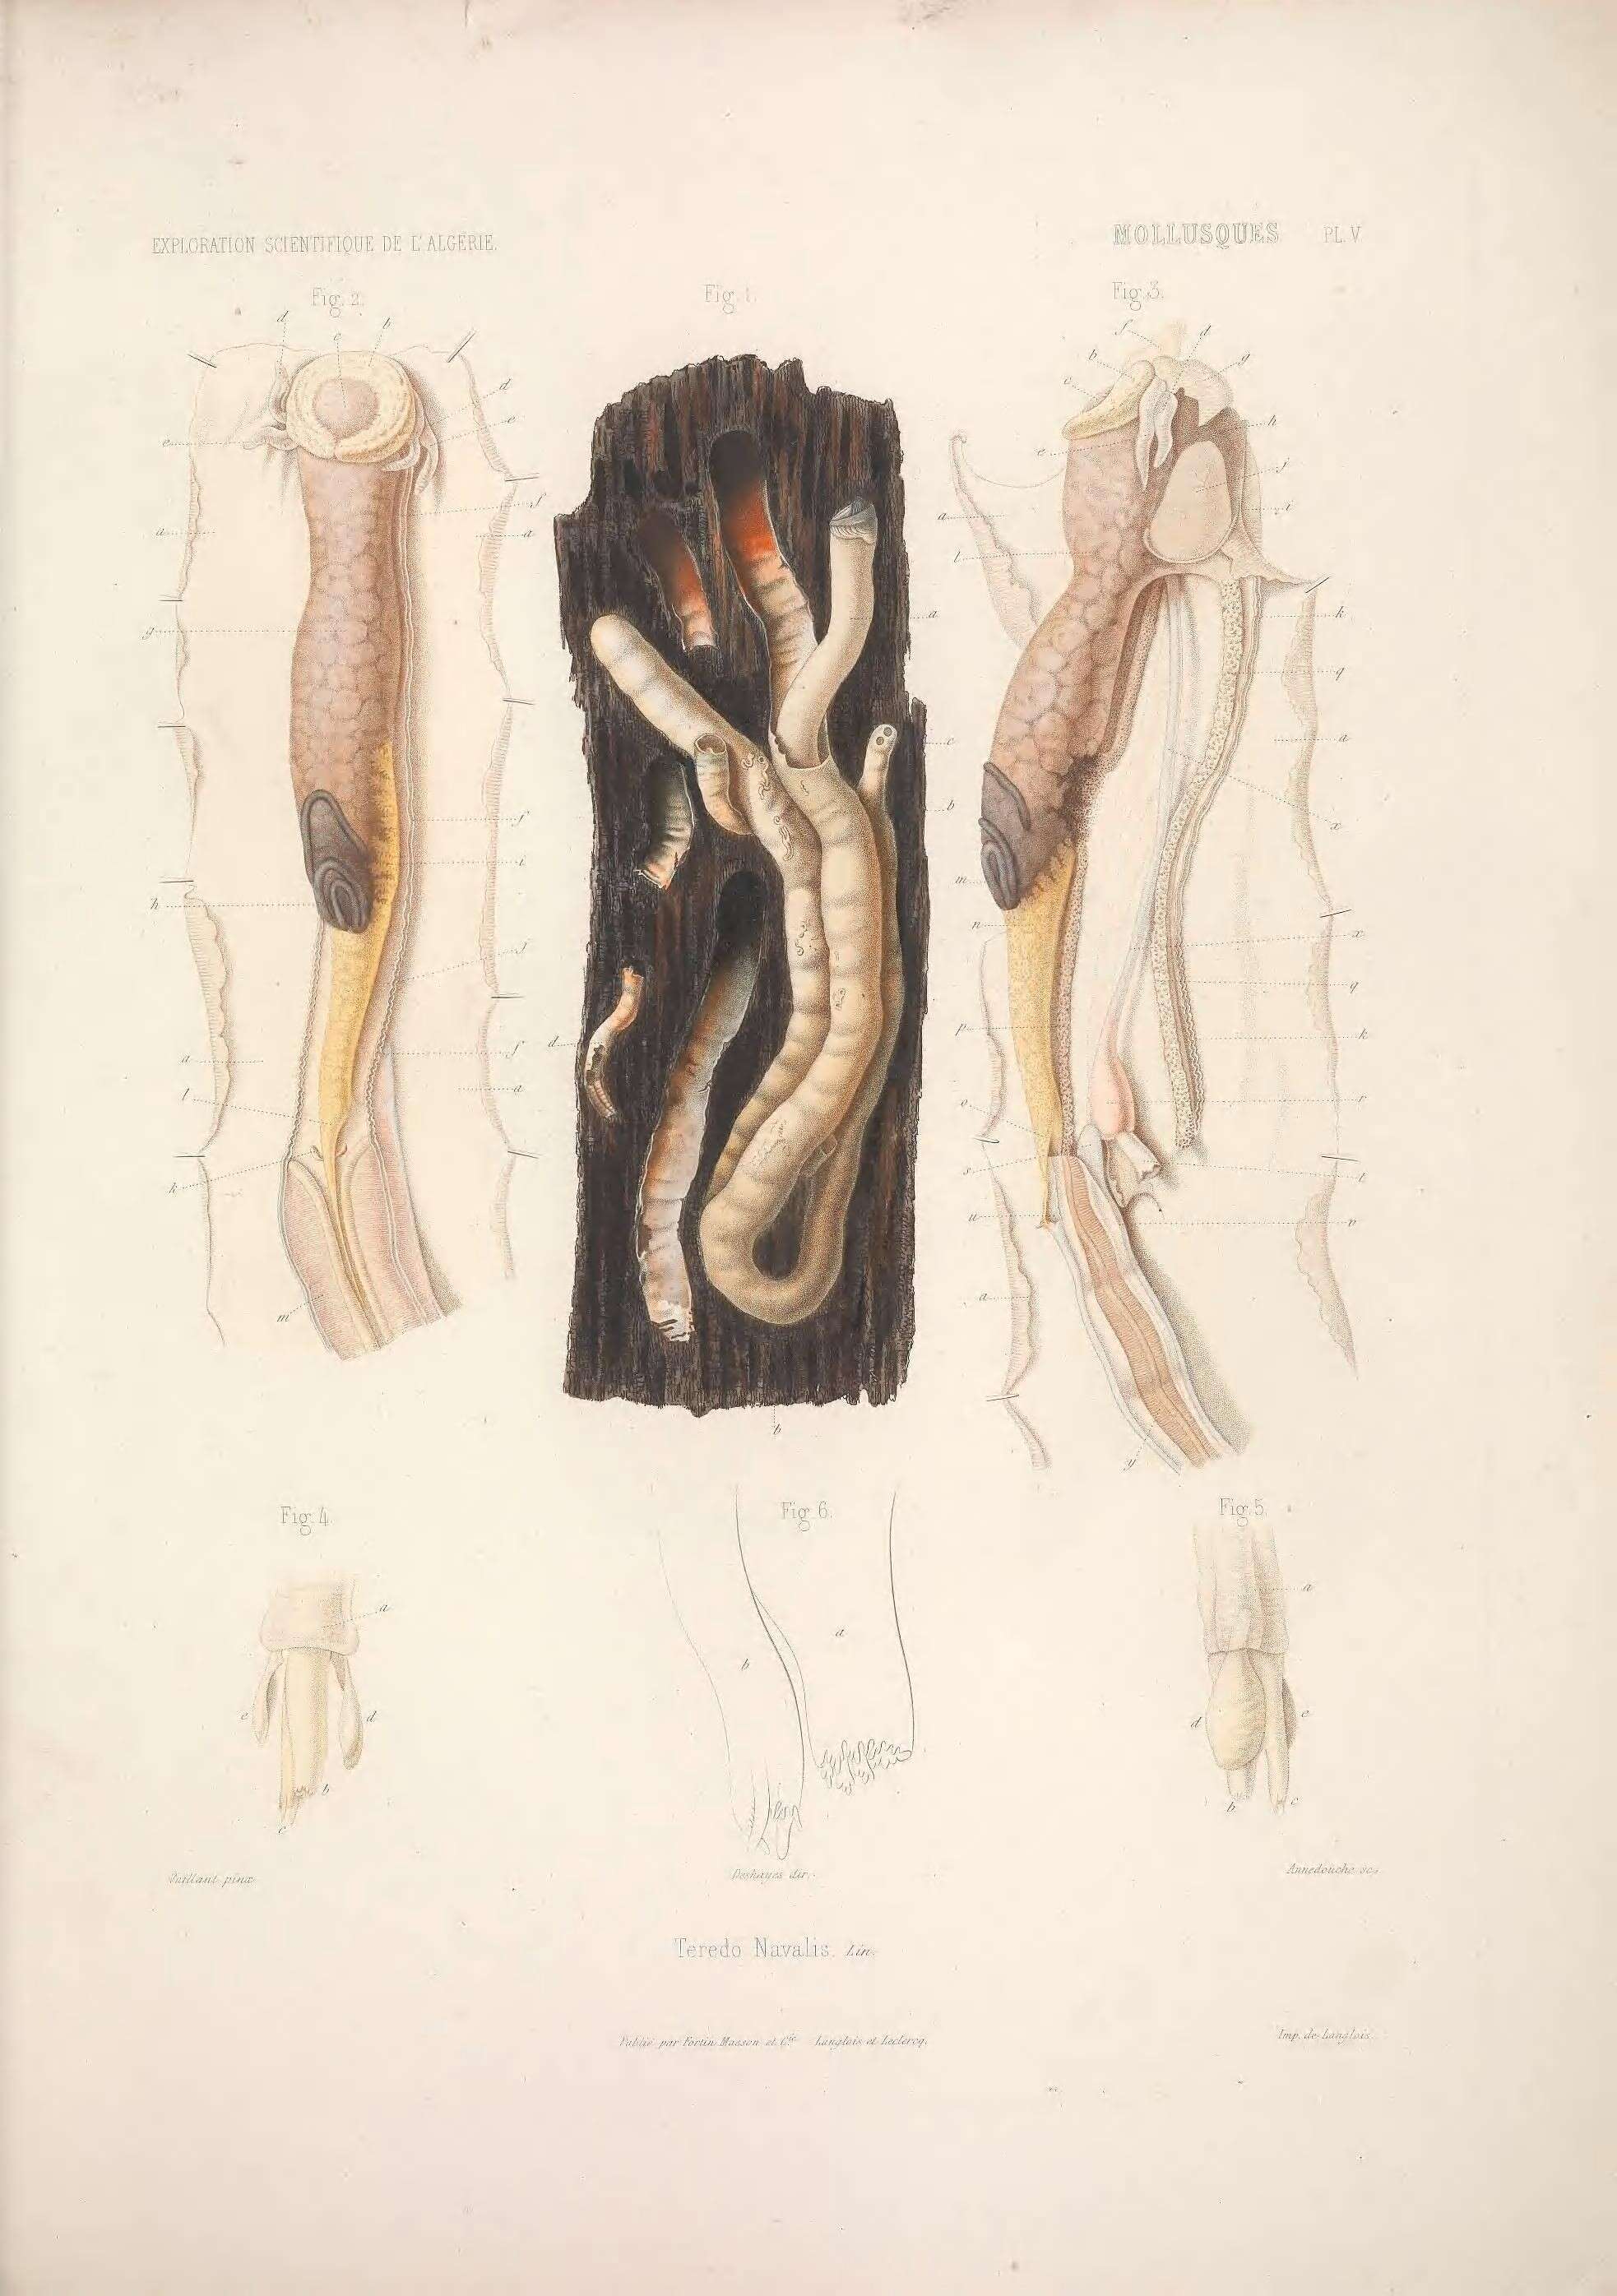 Image of Teredo Linnaeus 1758